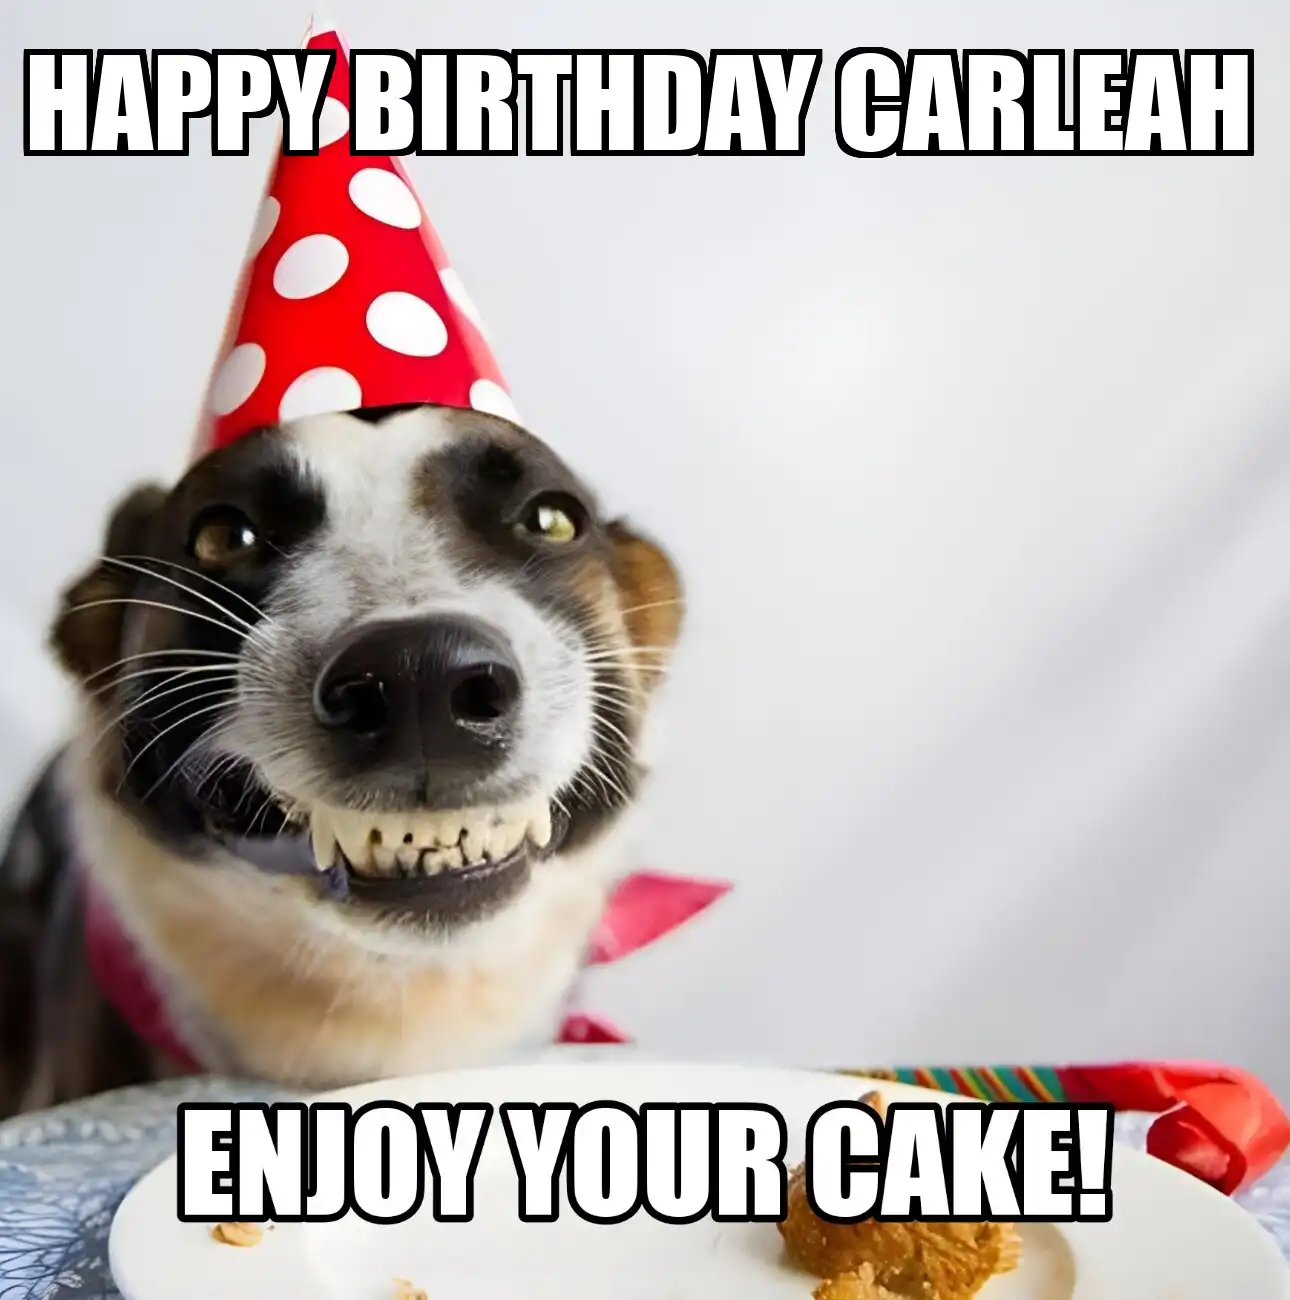 Happy Birthday Carleah Enjoy Your Cake Dog Meme